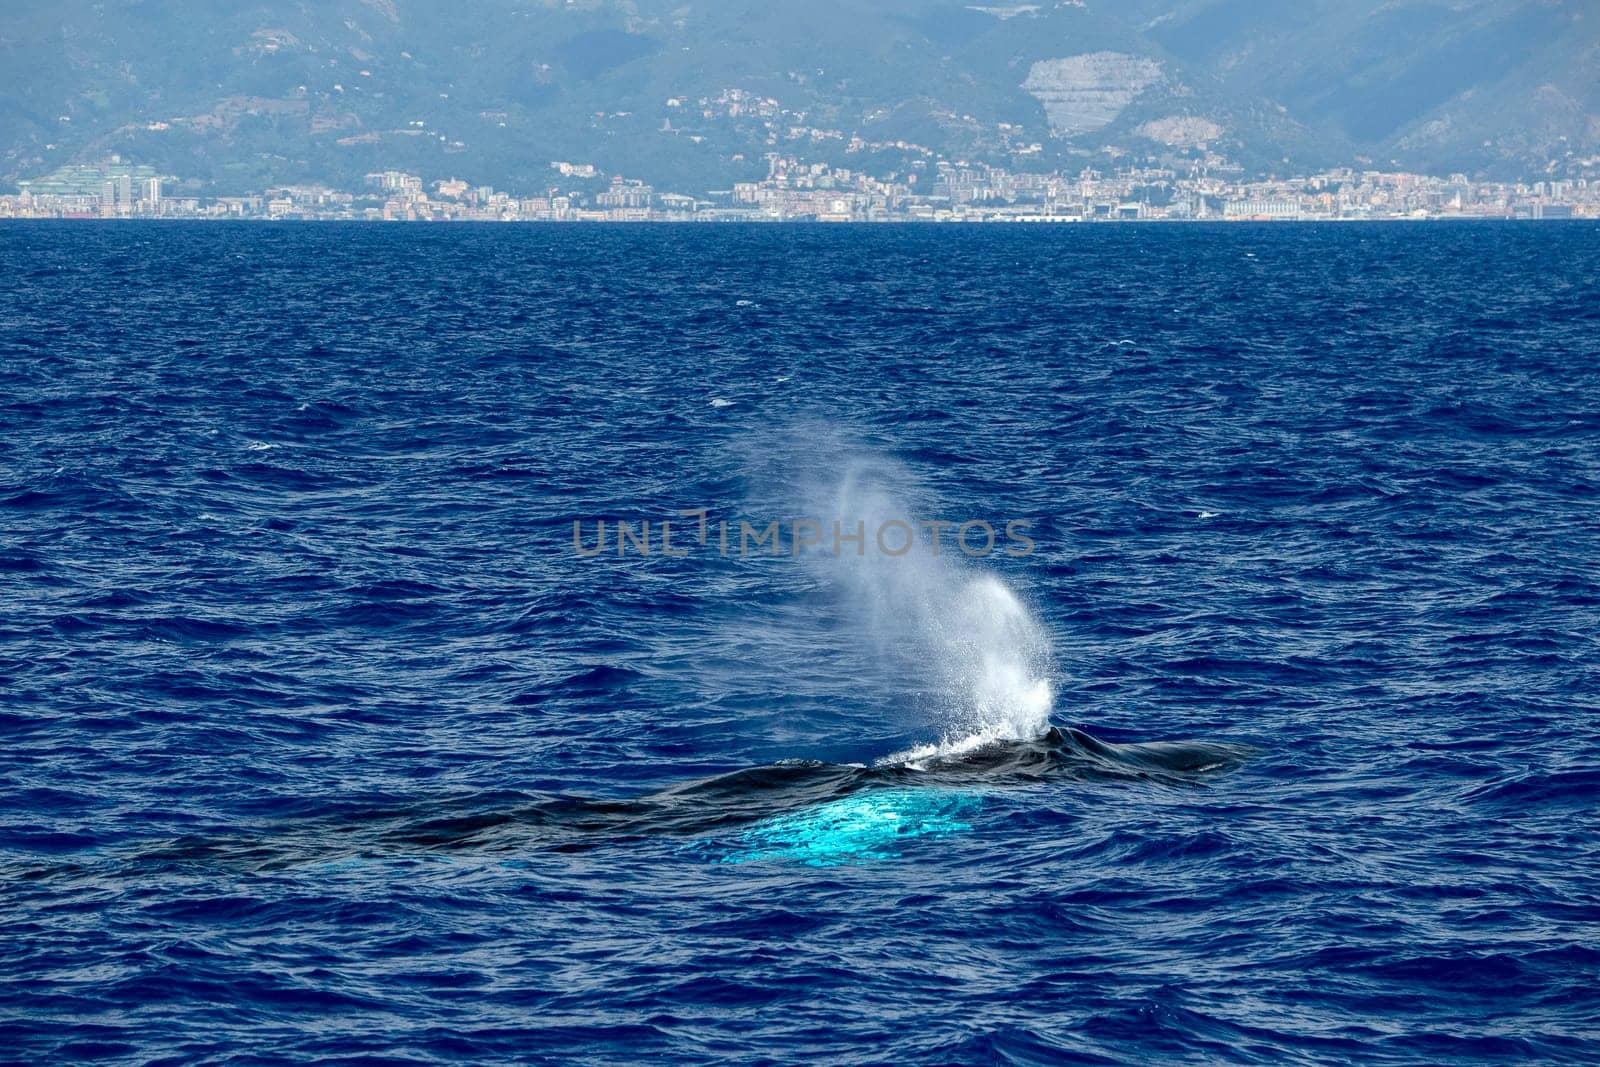 Humpback whale in Mediterranean sea ultra rare near Genoa, Italy August 2020 by AndreaIzzotti